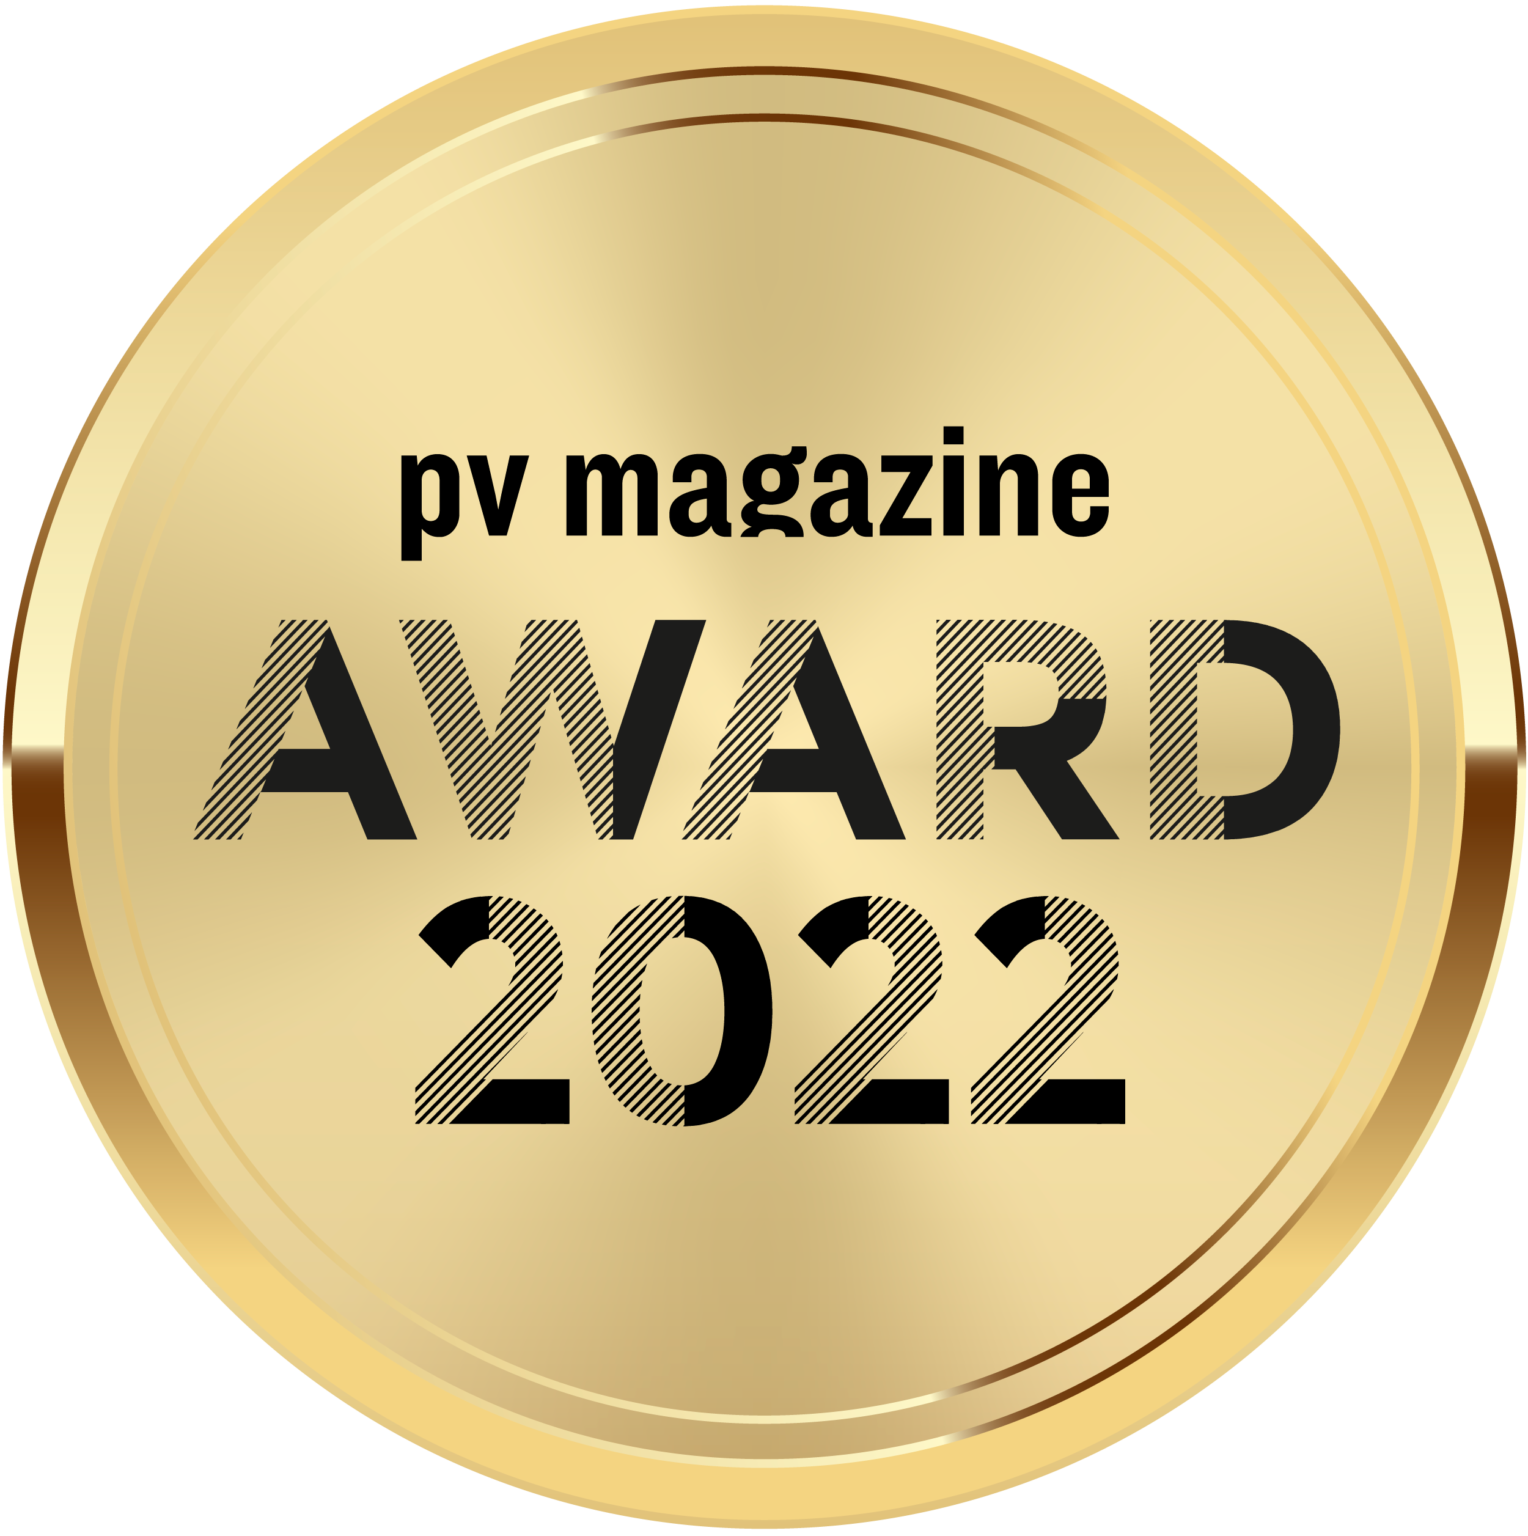 PV Magazine Award 2022 logo